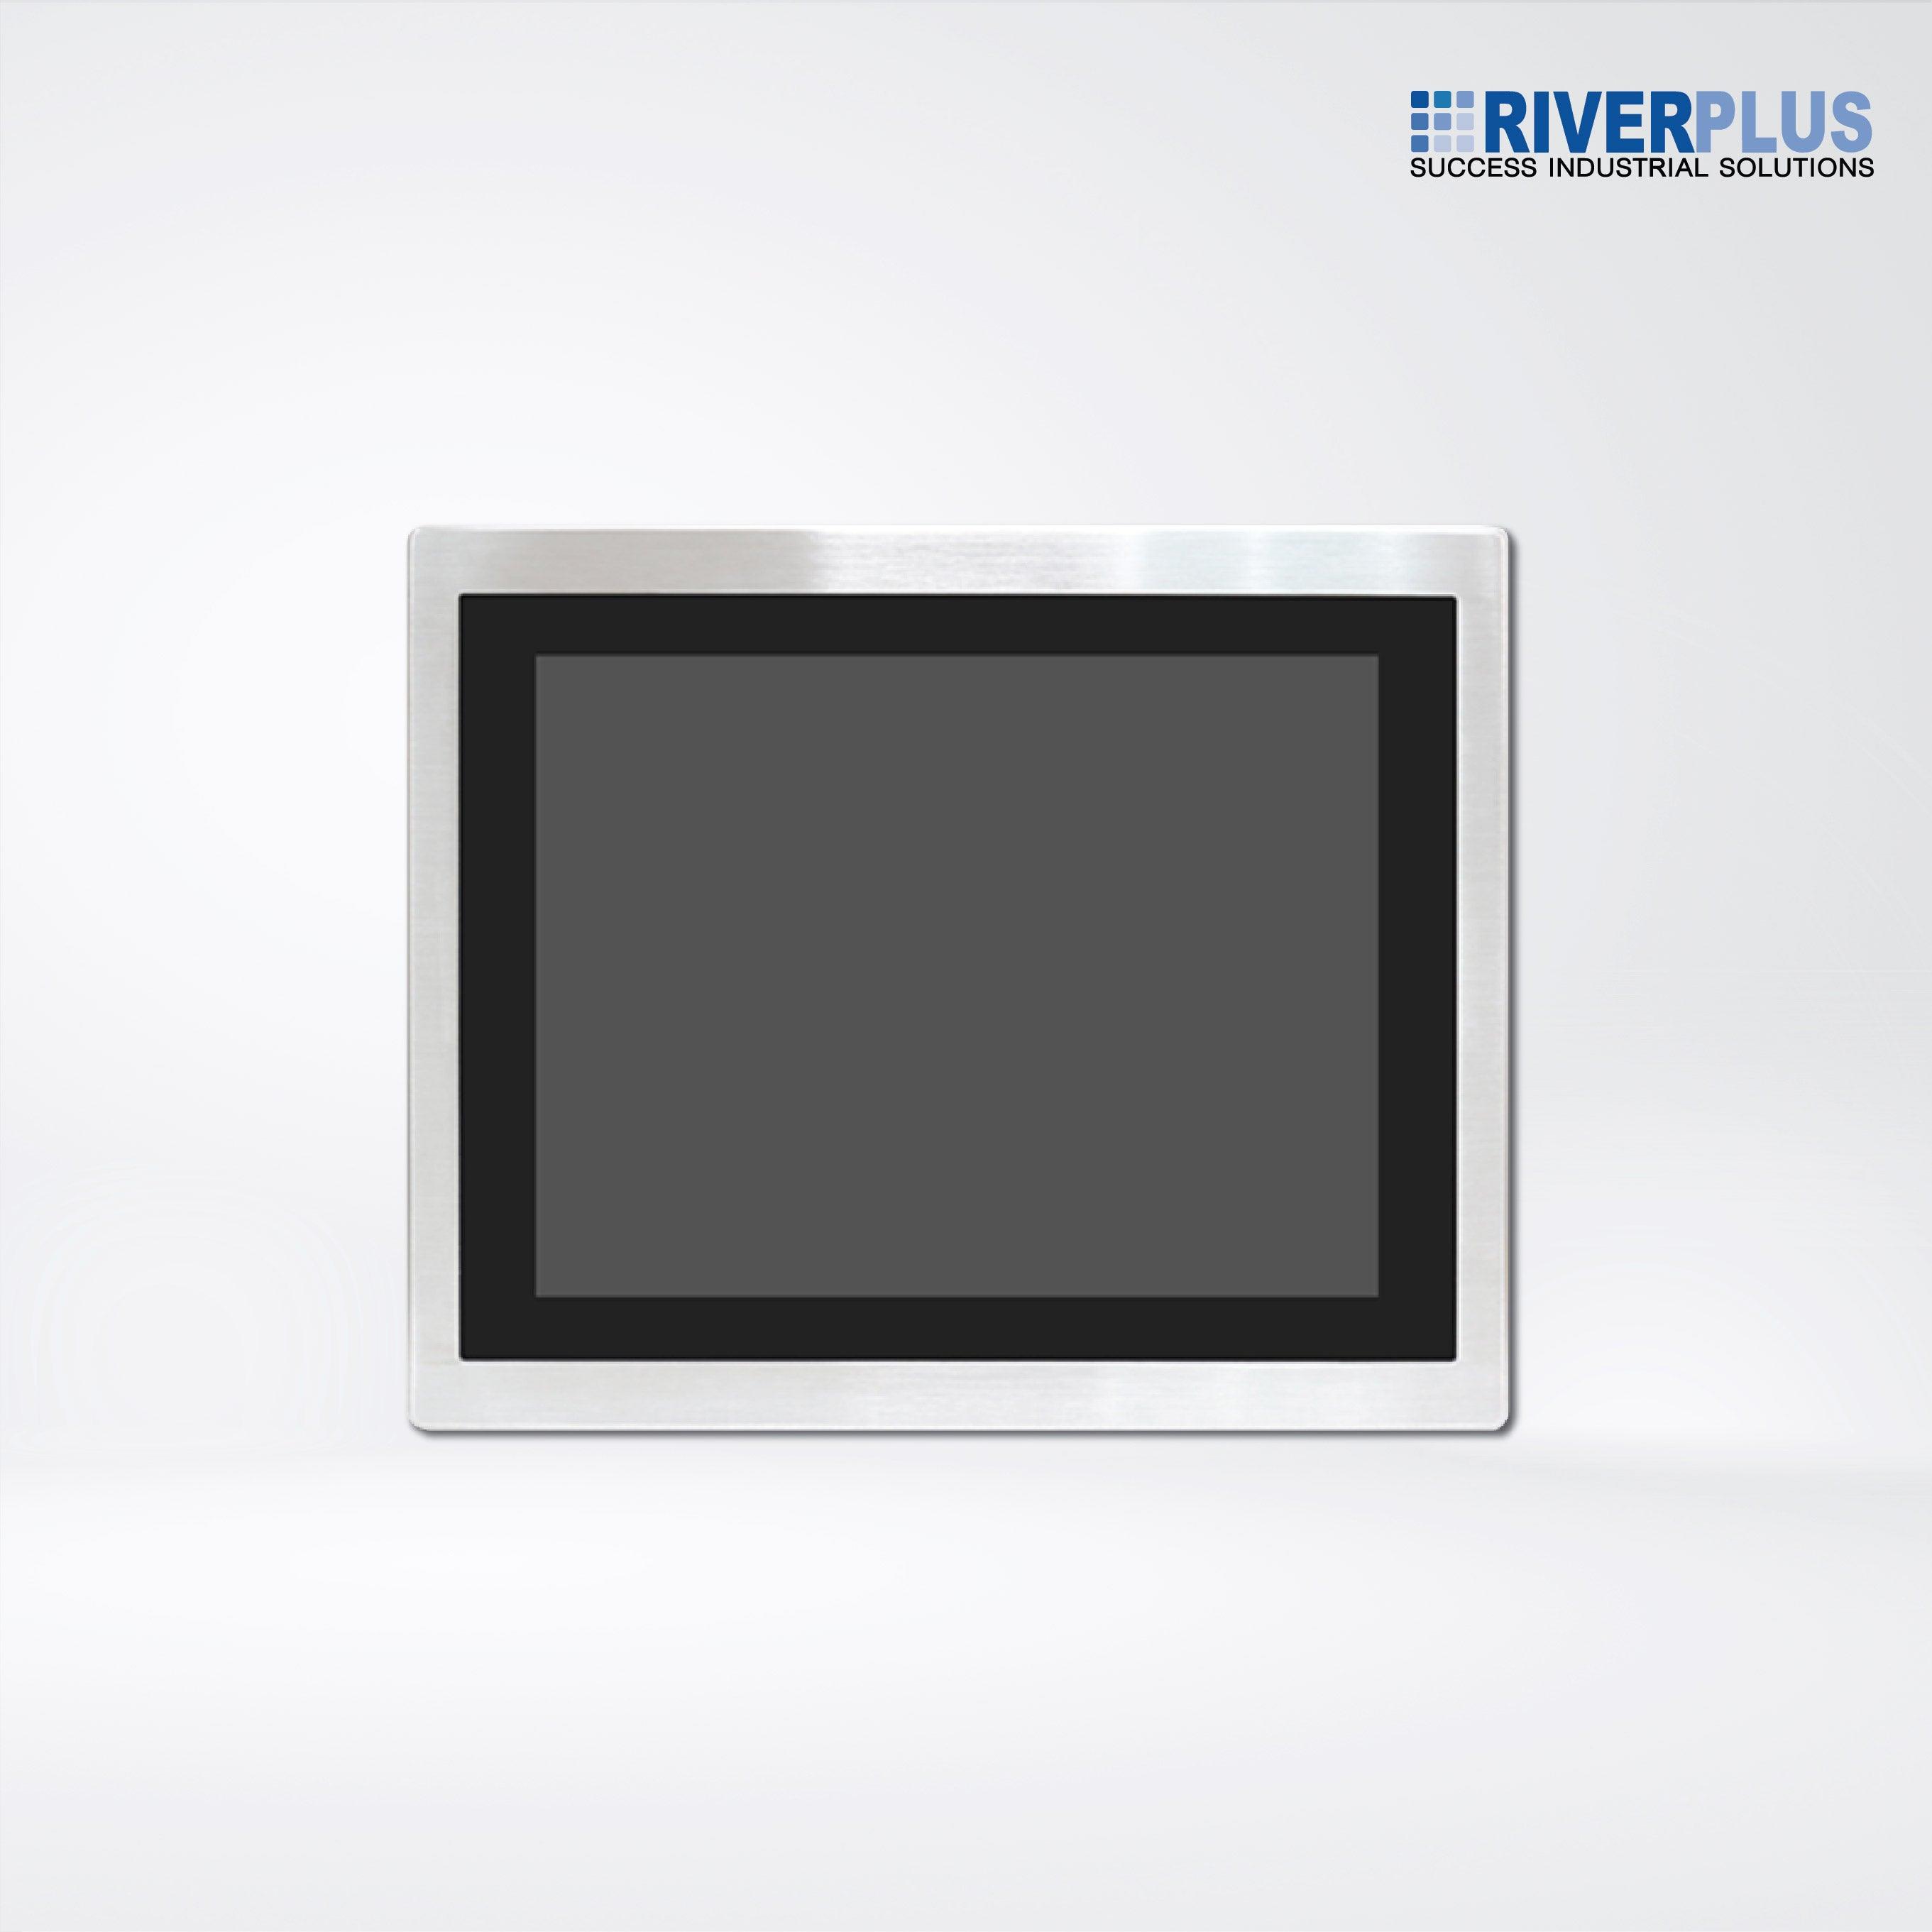 AEx-815PH 15″ Intel Celeron N2930 IP66 Stainless Steel Panel PC, Luminance : 1,000 (cd/m²) - Riverplus